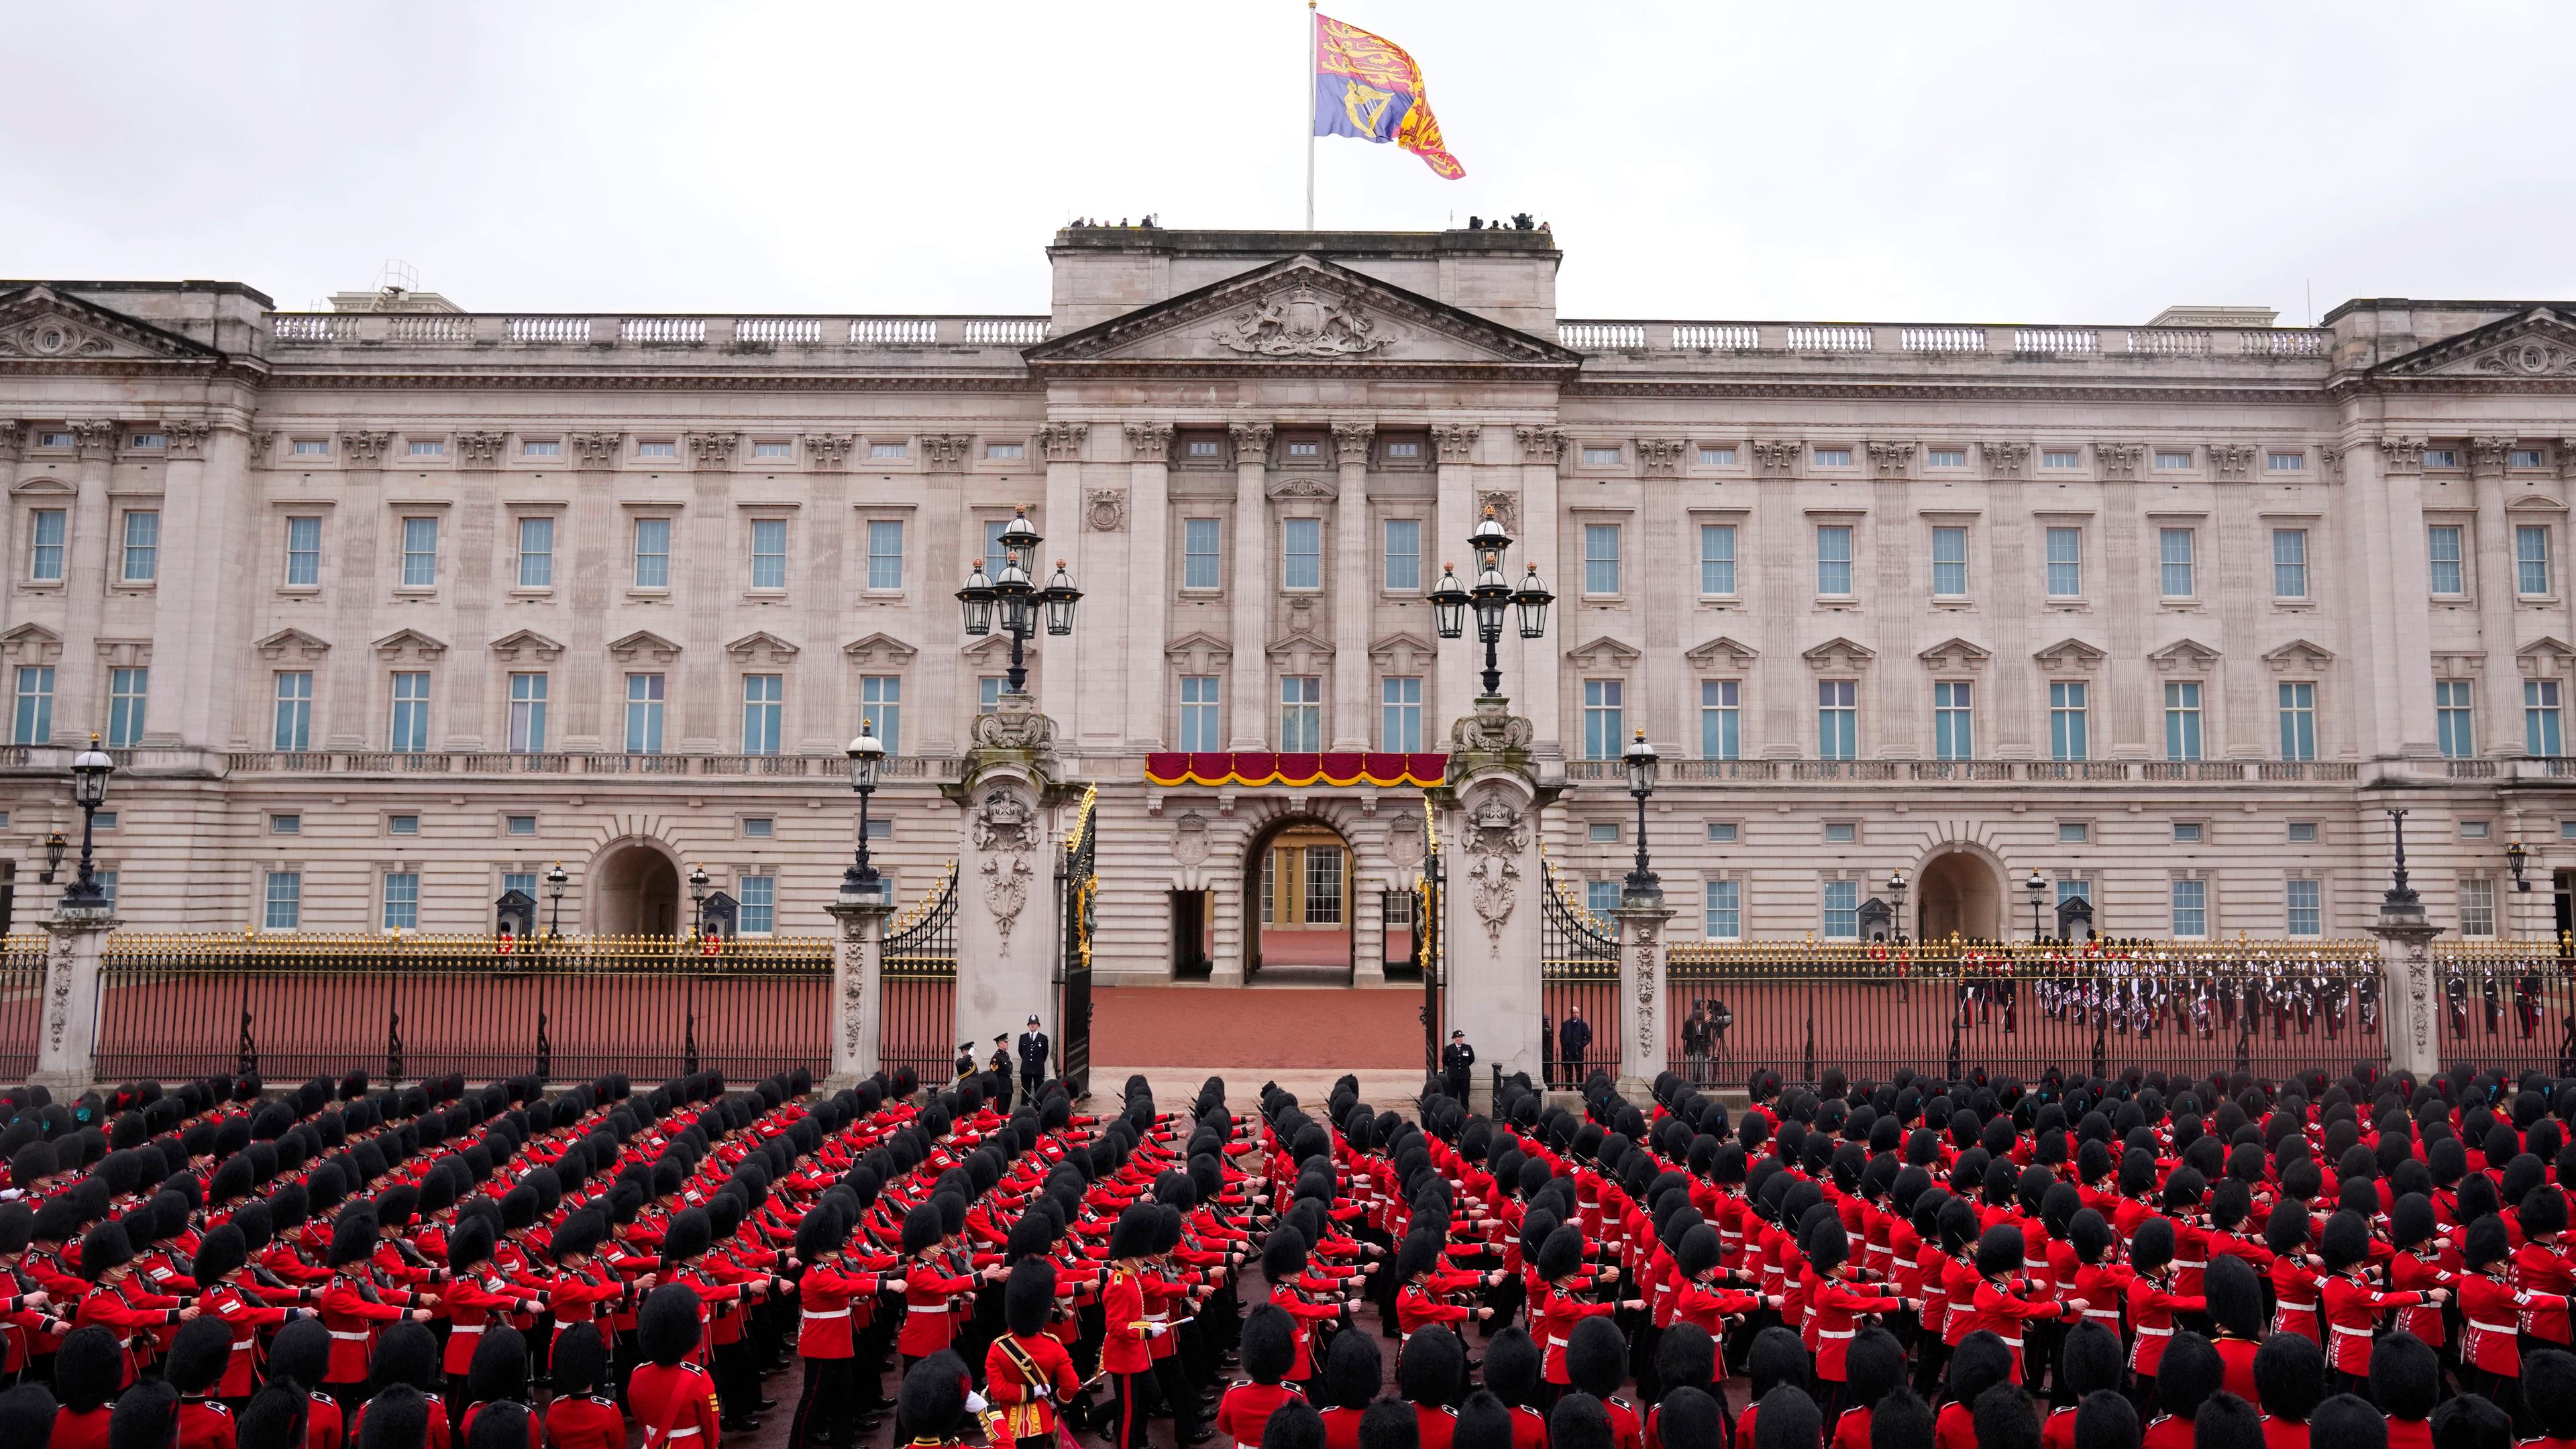 Buckingham Palace, King Guards